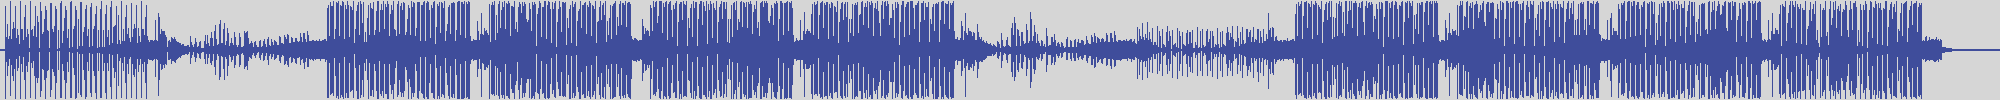 nf_boyz_records [NFY077] The Modell - La Wally [Island Mix] audio wave form